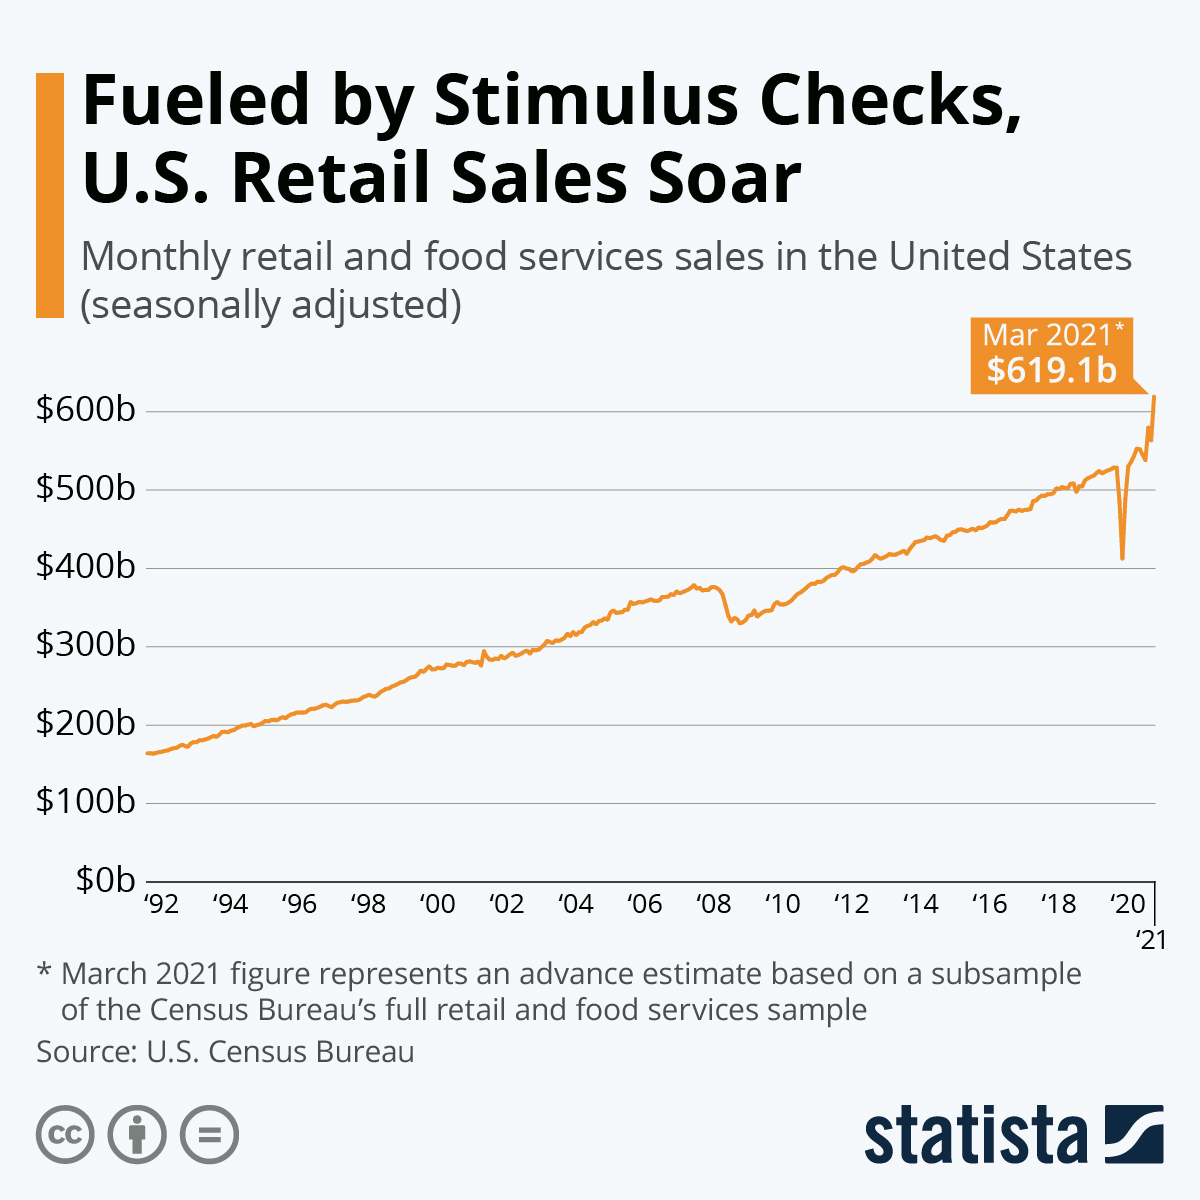 Fueled by Stimulus Checks, U.S. Retail Sales Soar